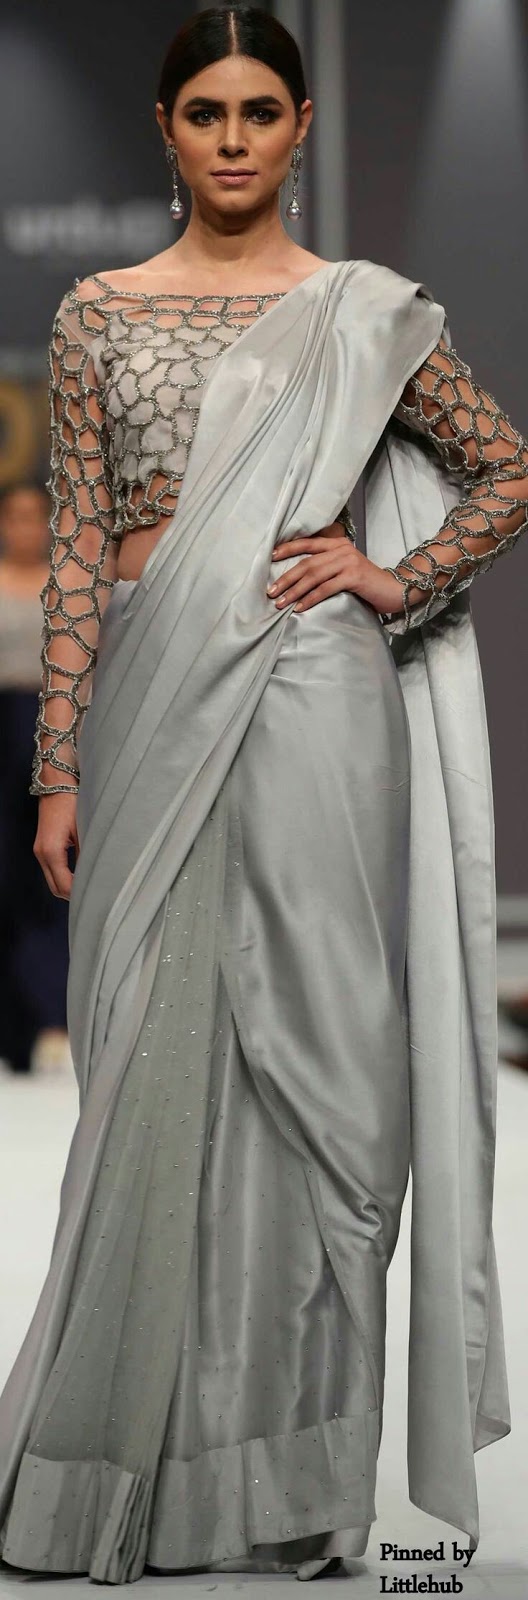 50+ Trendy Saree Blouse Sleeve Styles to try this wedding season ...